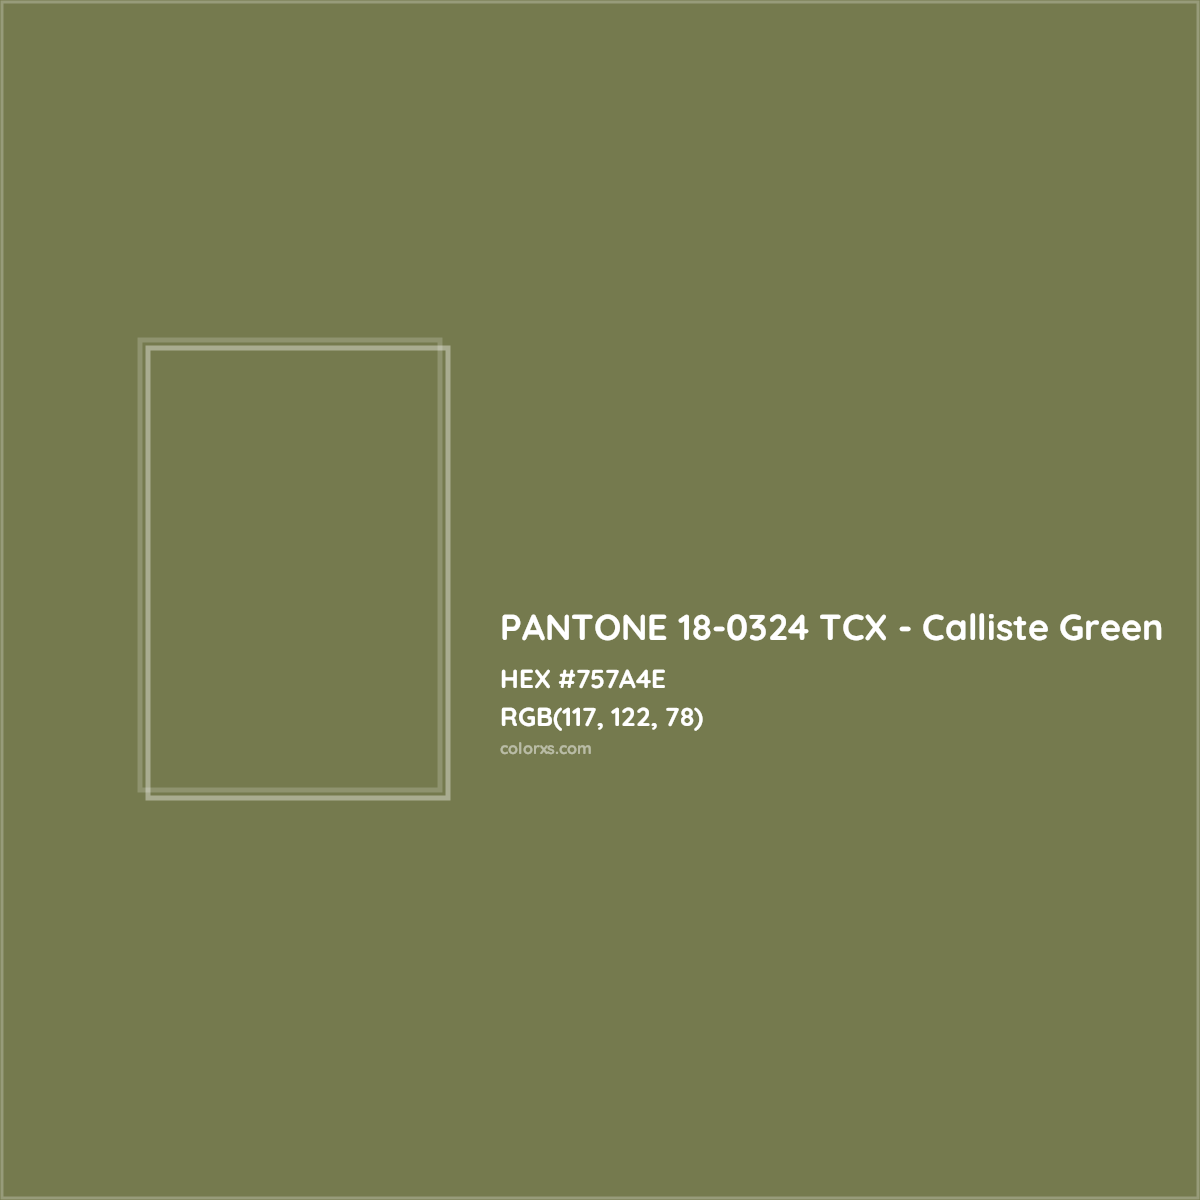 HEX #757A4E PANTONE 18-0324 TCX - Calliste Green CMS Pantone TCX - Color Code